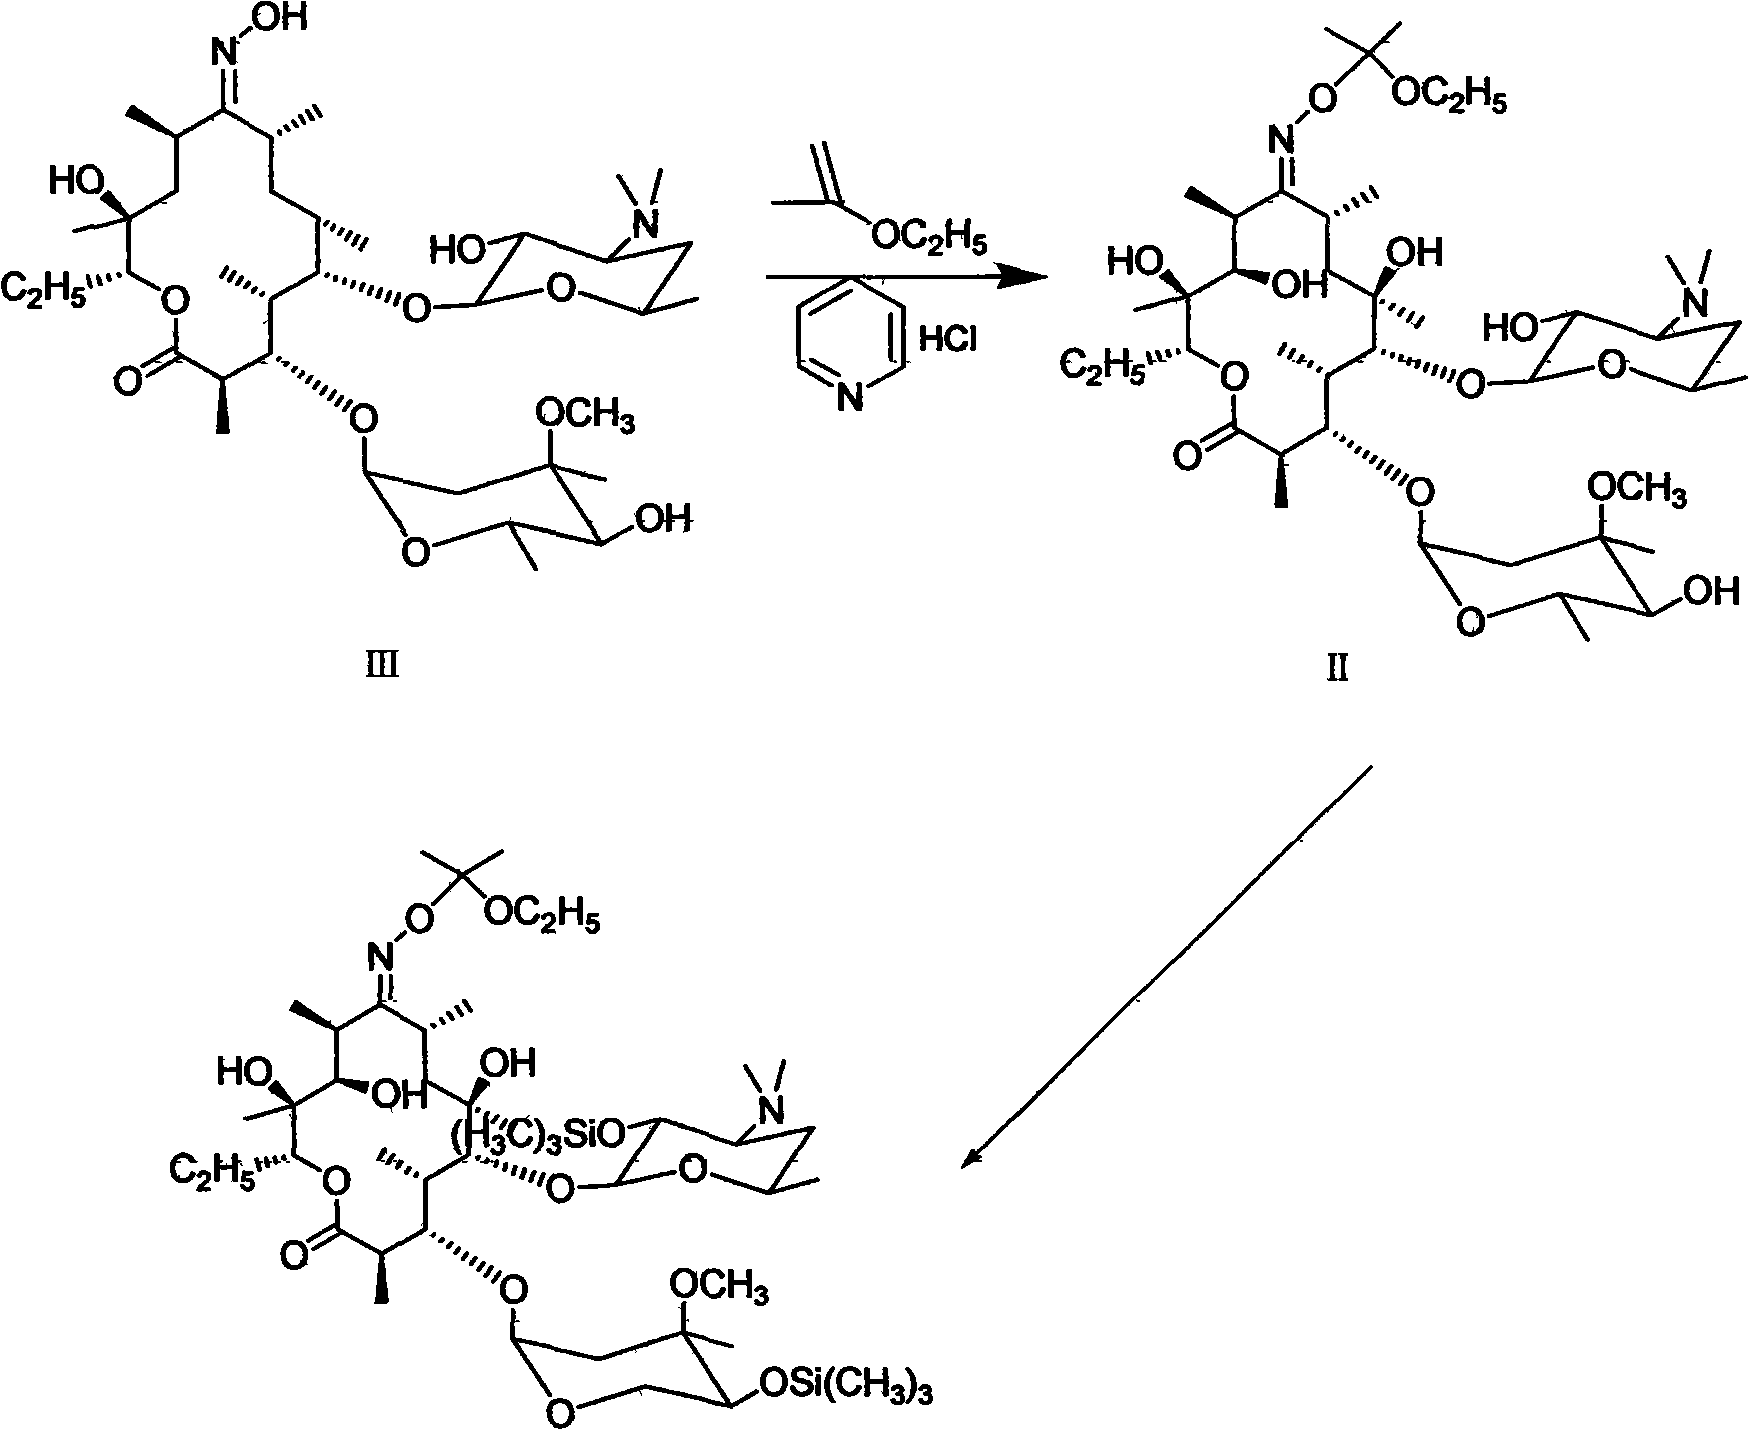 Silanization reaction catalyst